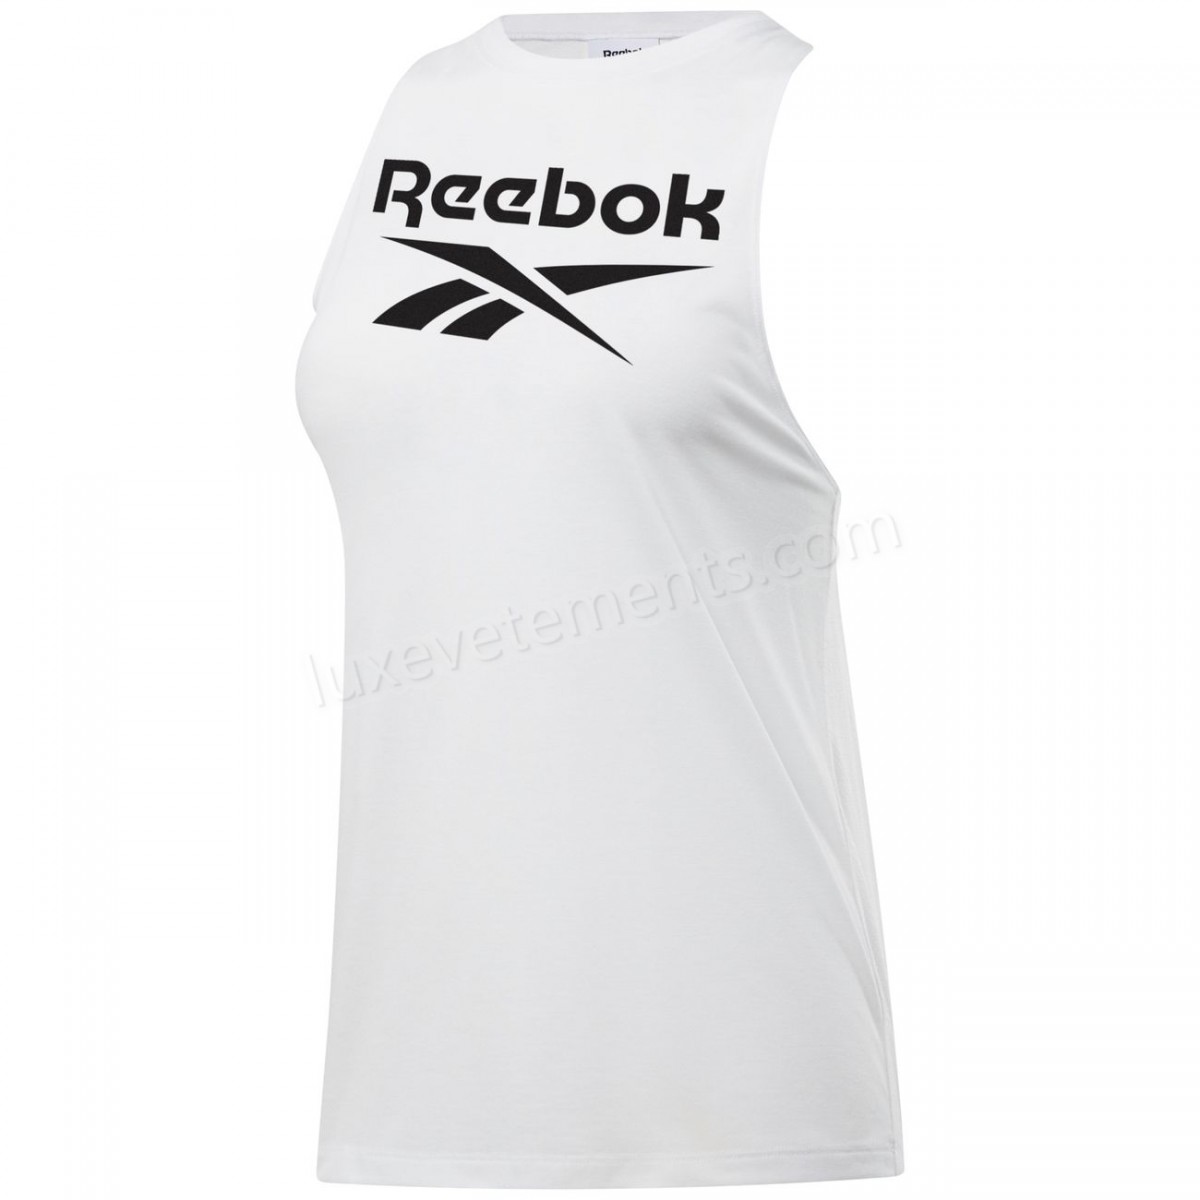 Reebok-Fitness femme REEBOK Débardeur femme Reebok Workout Ready Supremium BL Vente en ligne - -2